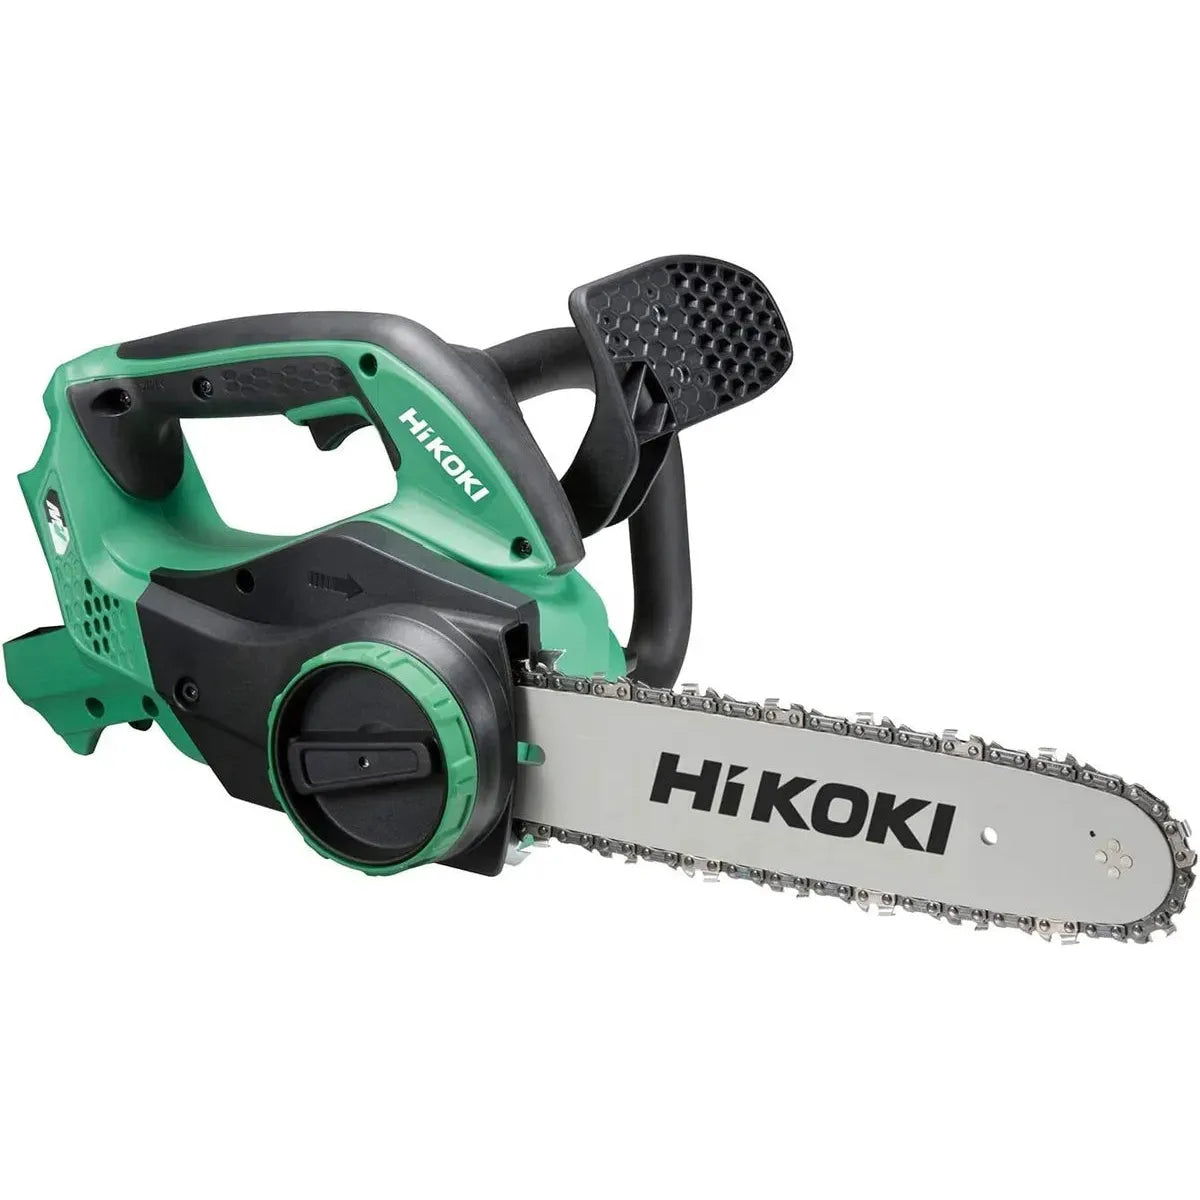 Hikoki MULTI VOLT (36V) Cordless Chain Saw Solo CS3630DA-W4 Power Tool Services